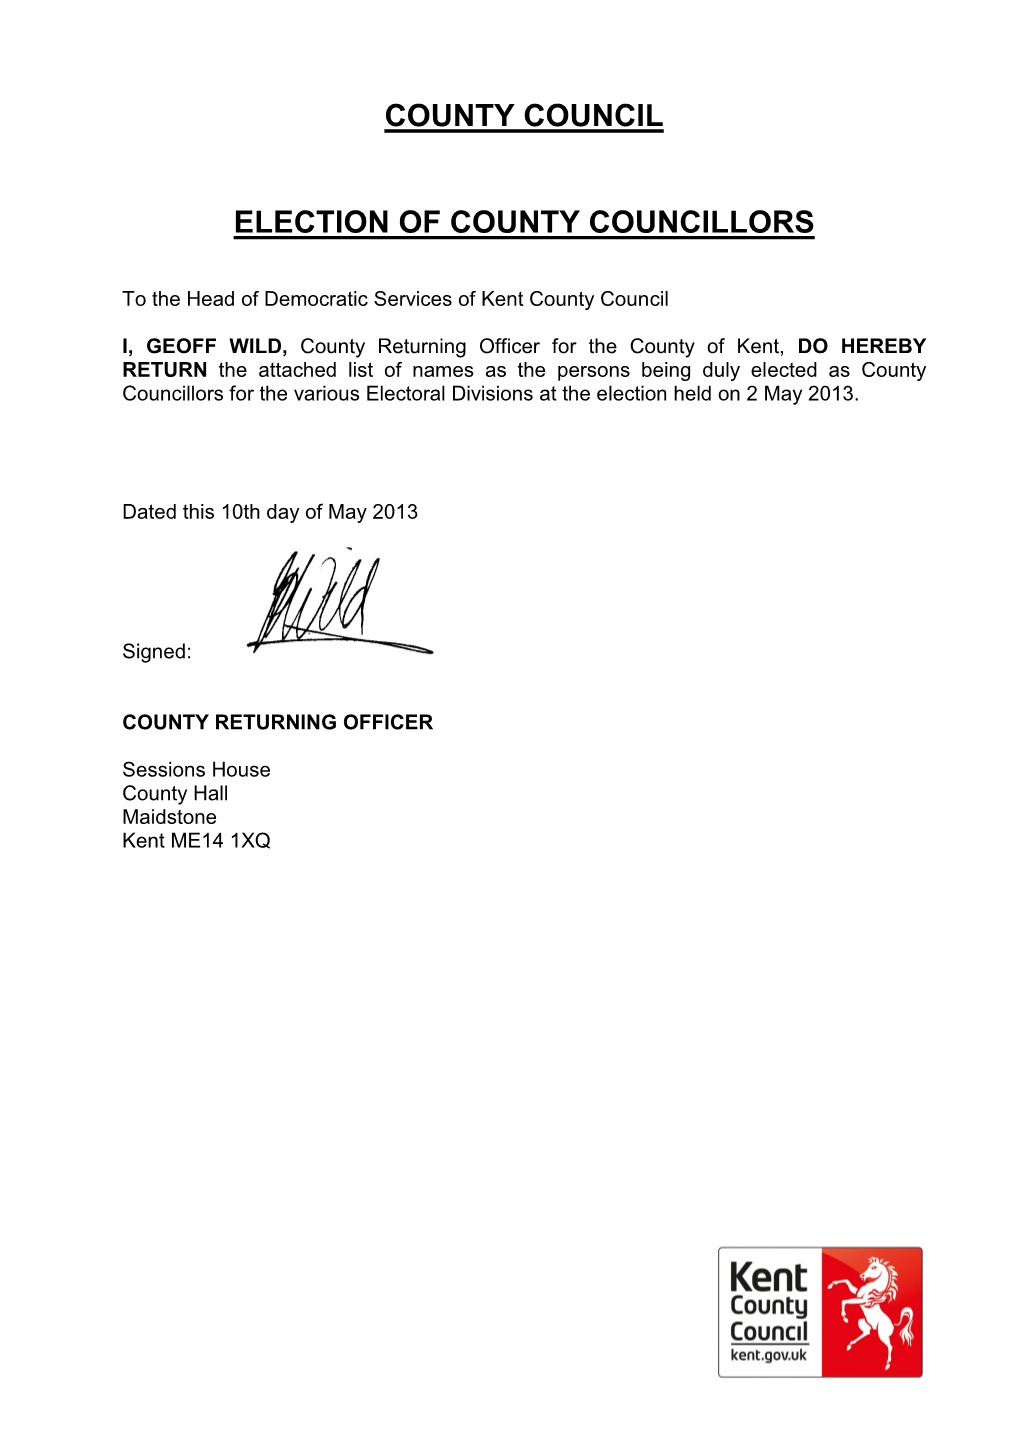 County Council Election of County Councillors